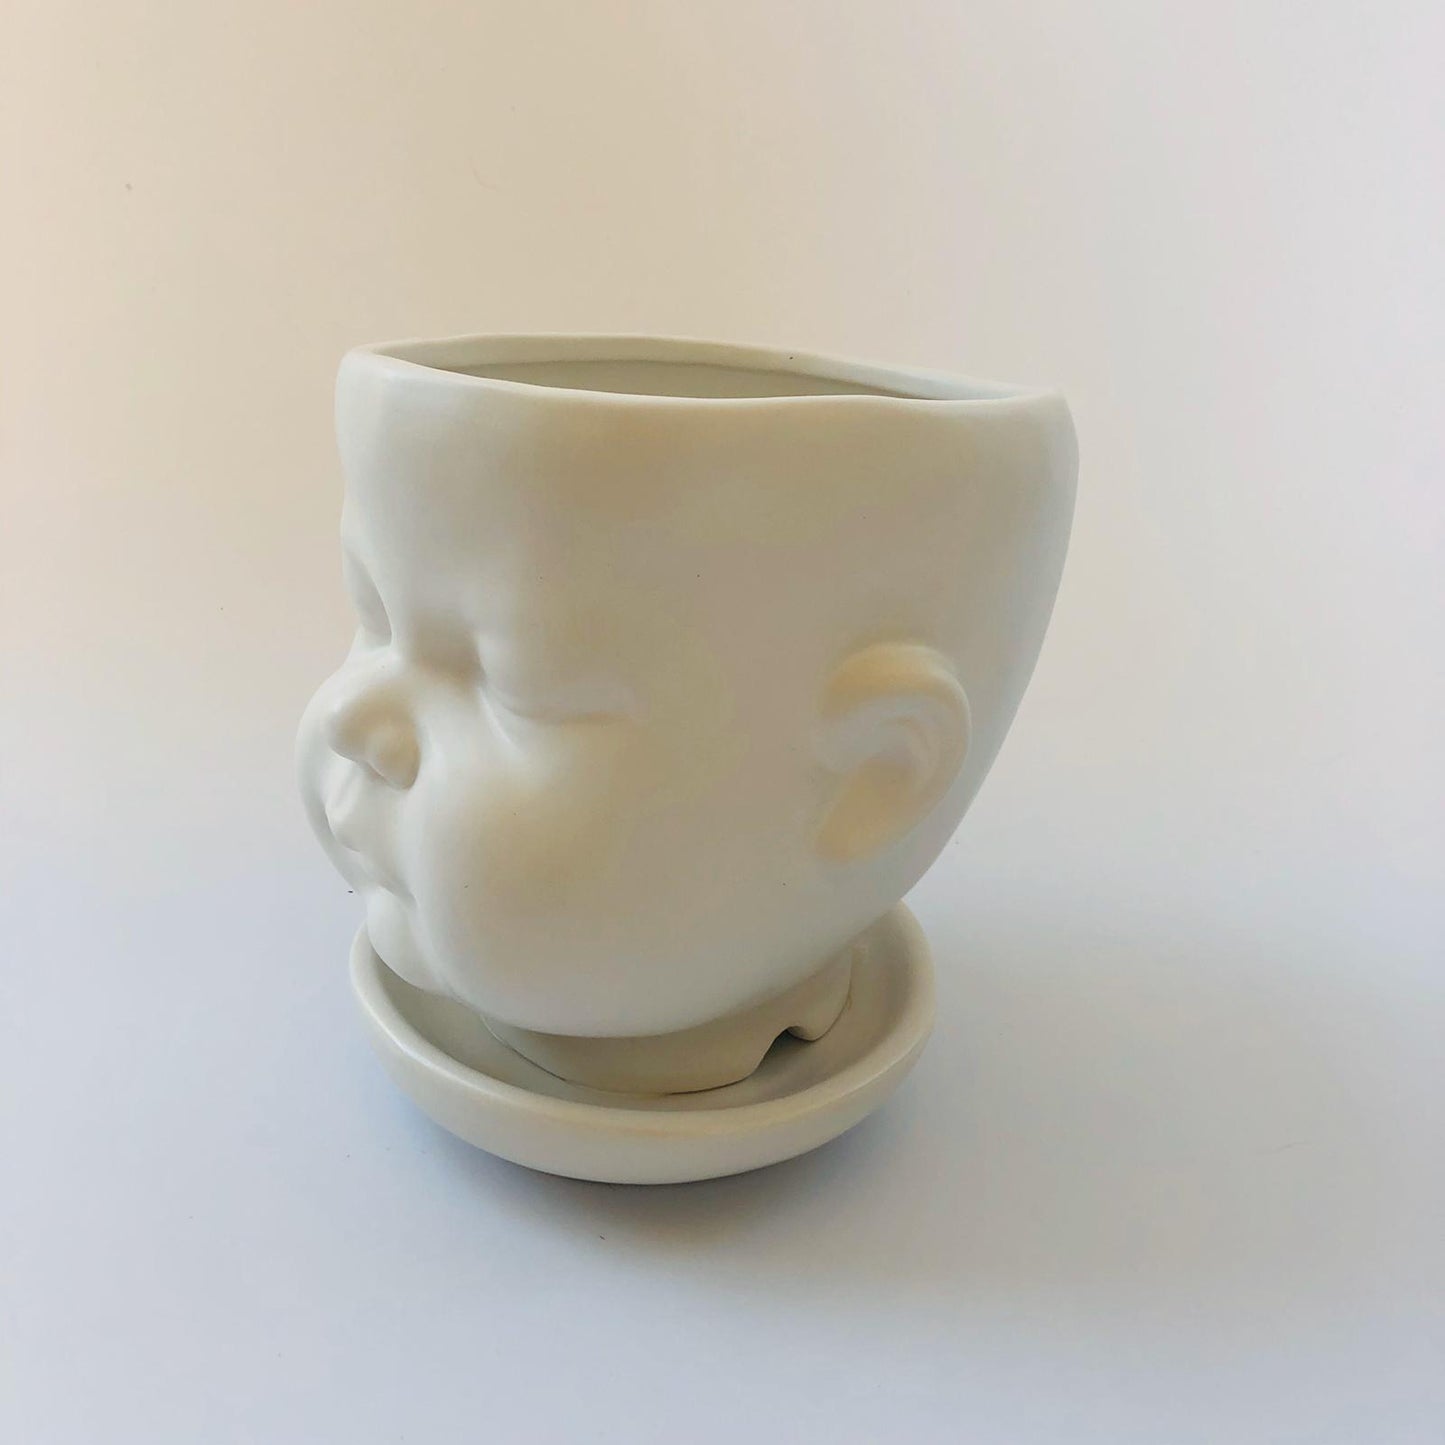 Large Ceramic Baby Face Plant Pot - ad&i